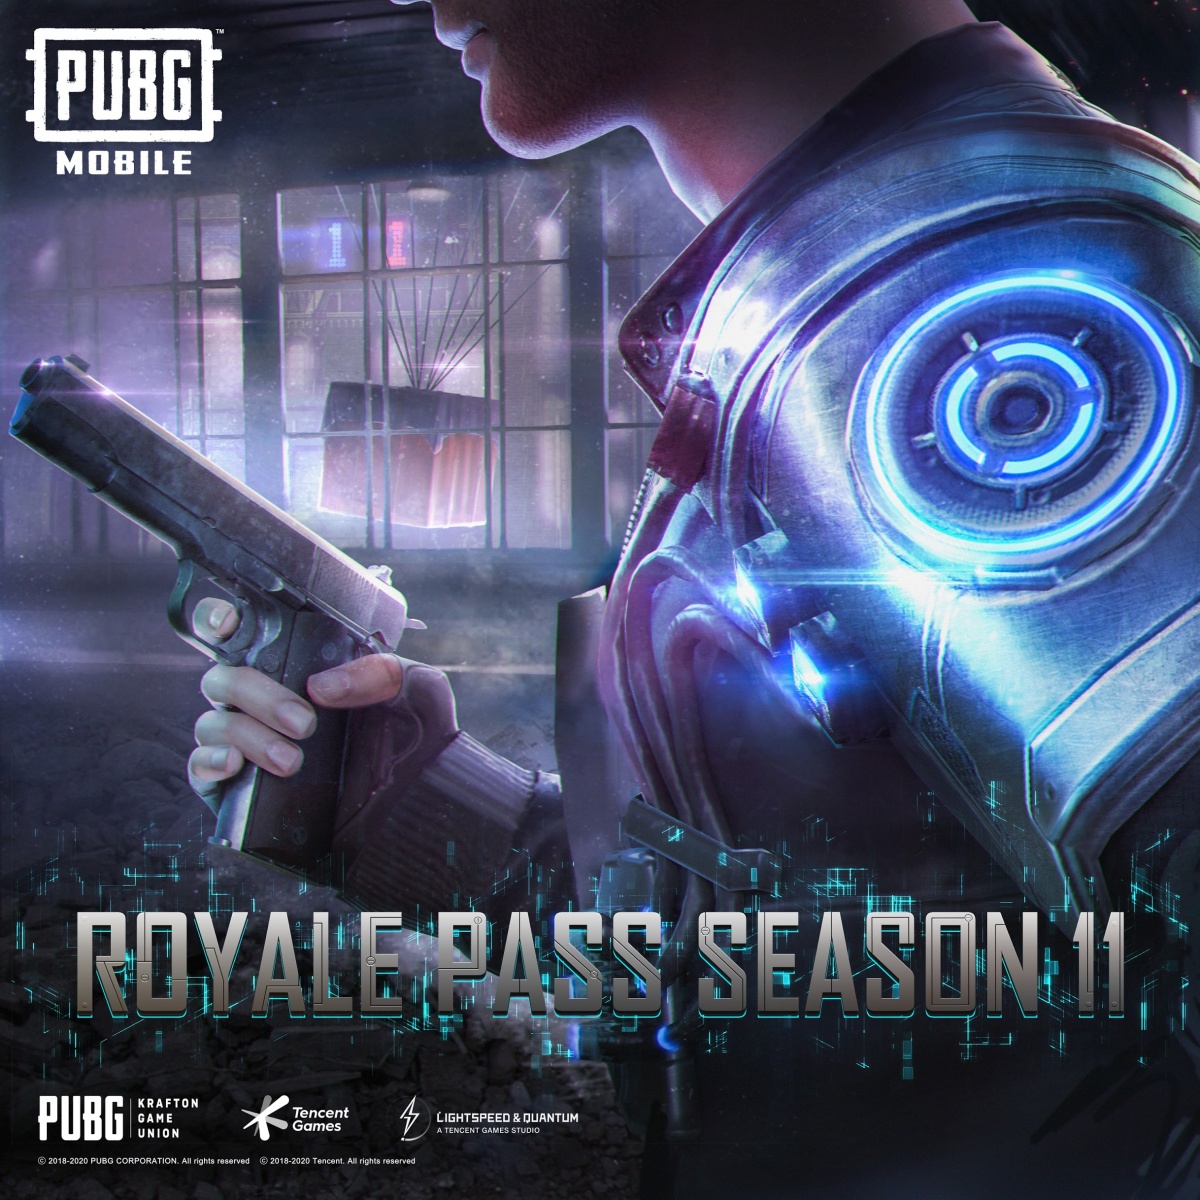 PUBG M Season 11